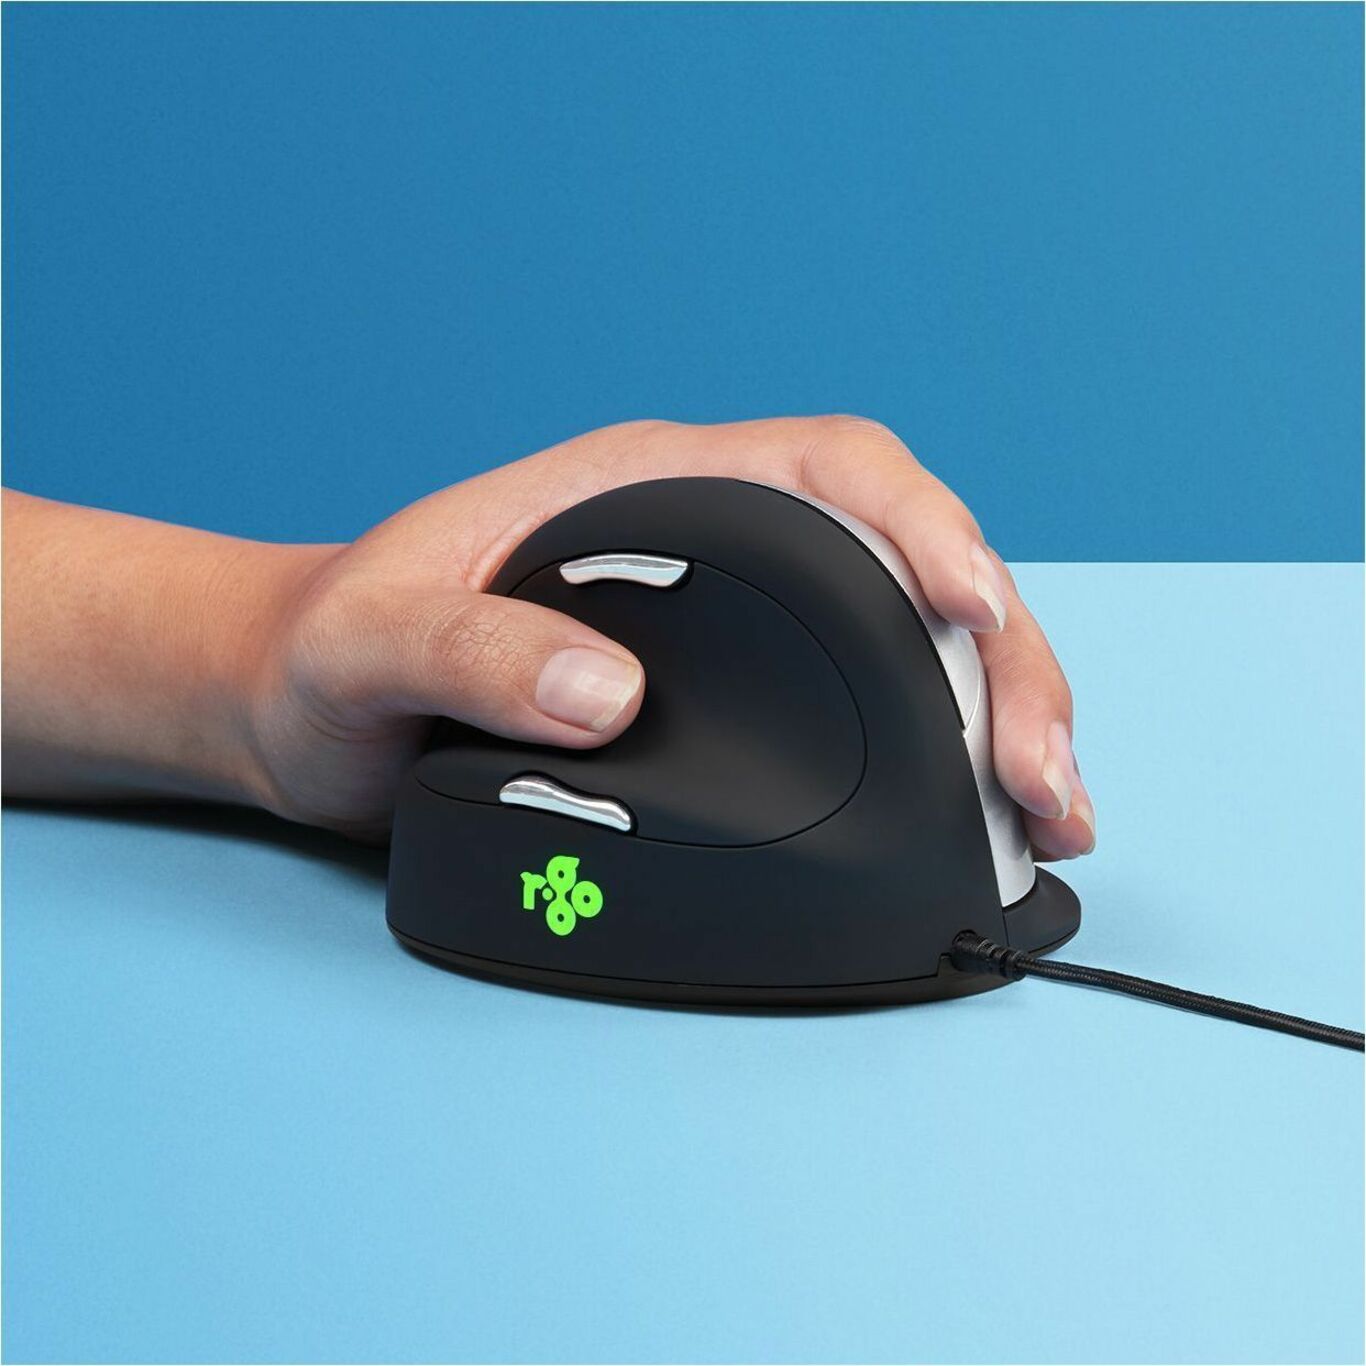 R-Go RGOBRHEMLL HE Break Mouse, Left-Handed Ergonomic Fit, Large Size, 5 Buttons, 2500 dpi, USB 2.0